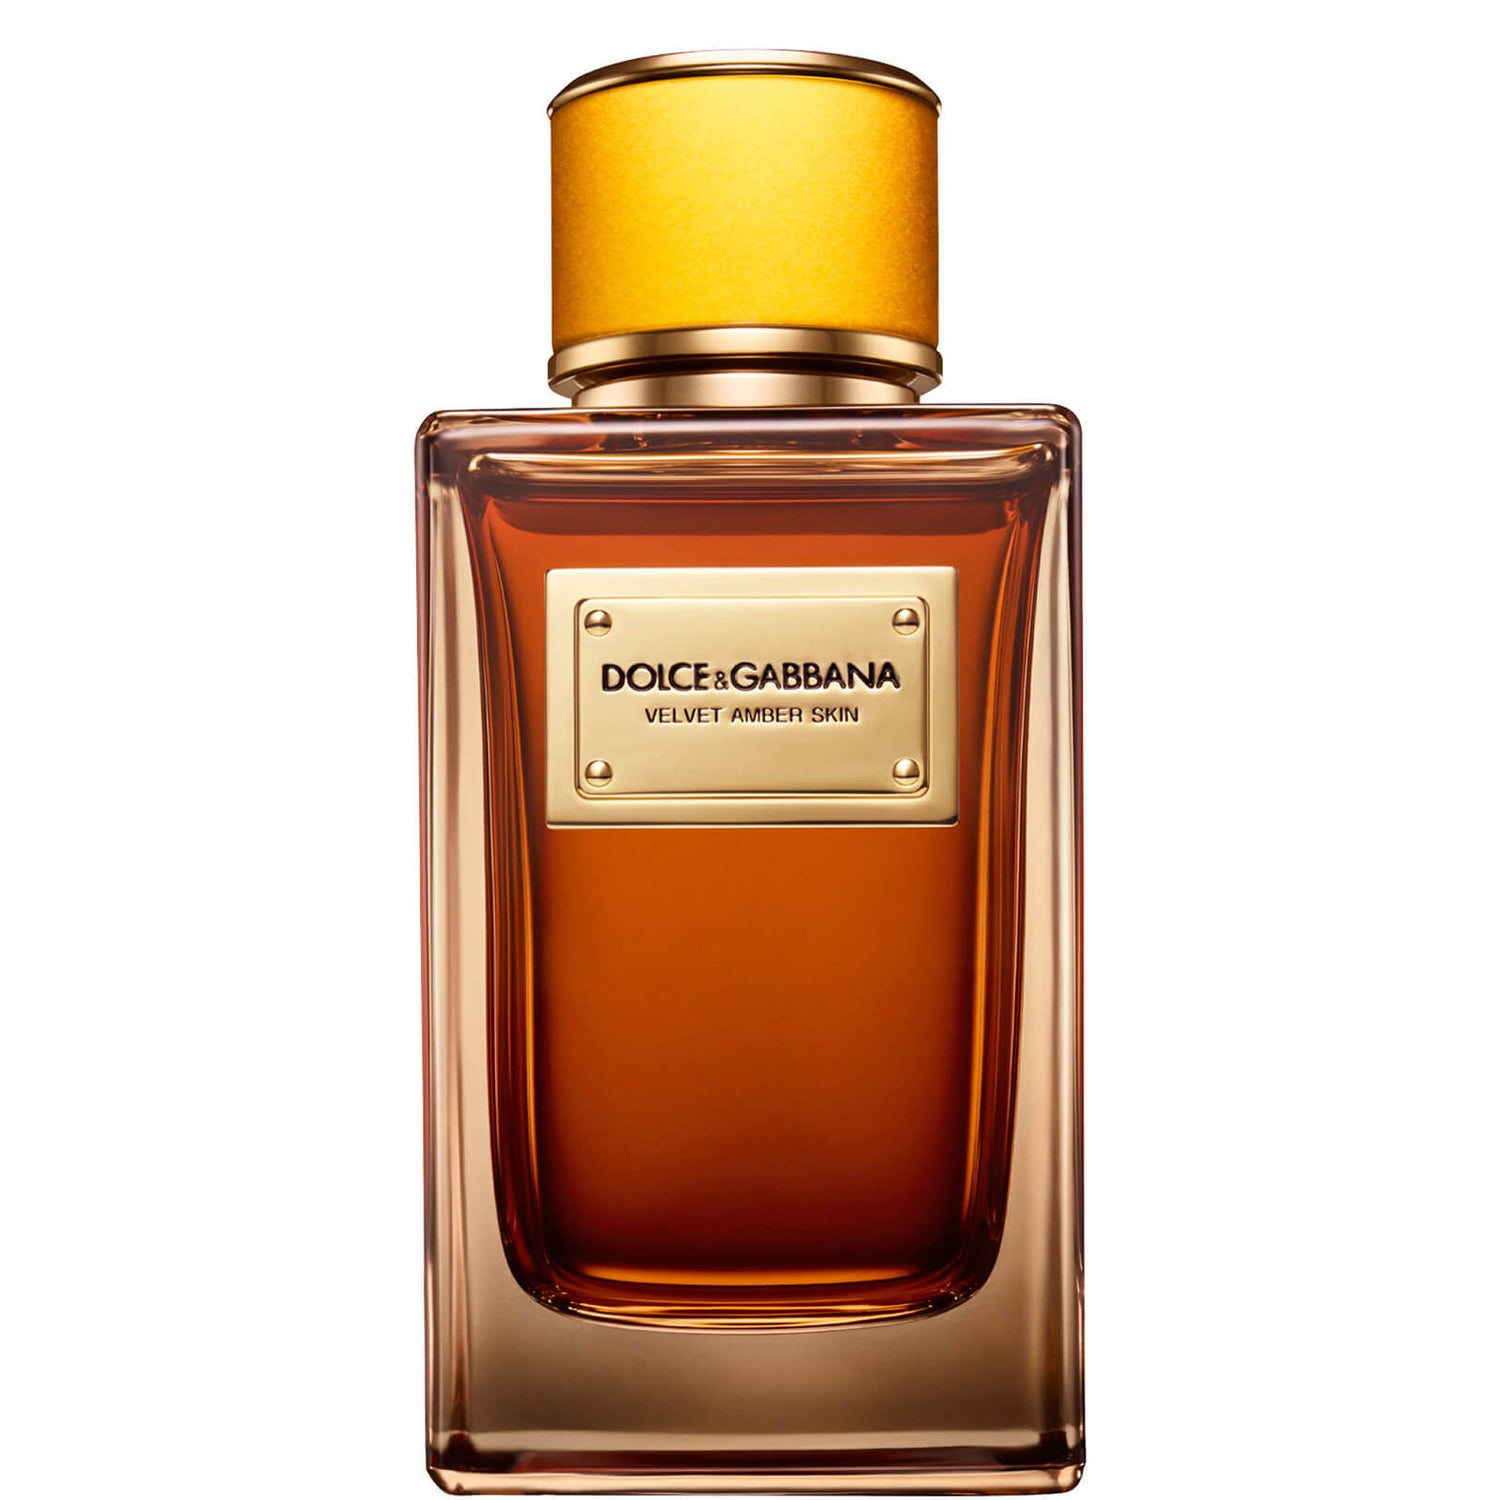 Dolce&Gabbana Velvet Amber Skin Eau de Parfum - 150ml